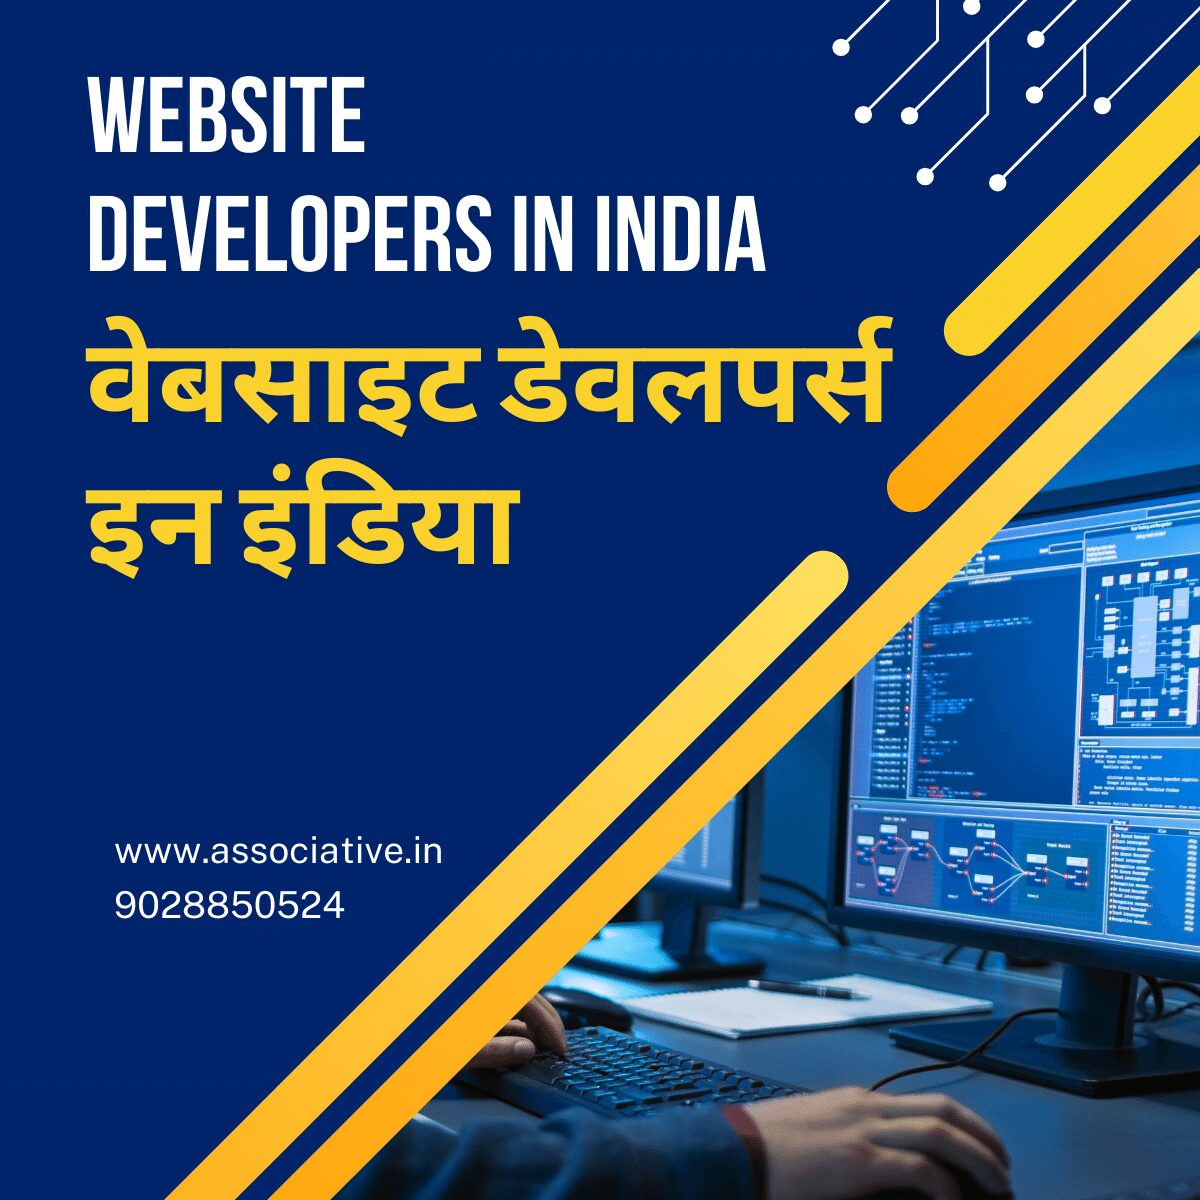 Website Developers in India वेबसाइट डेवलपर्स इन इंडिया